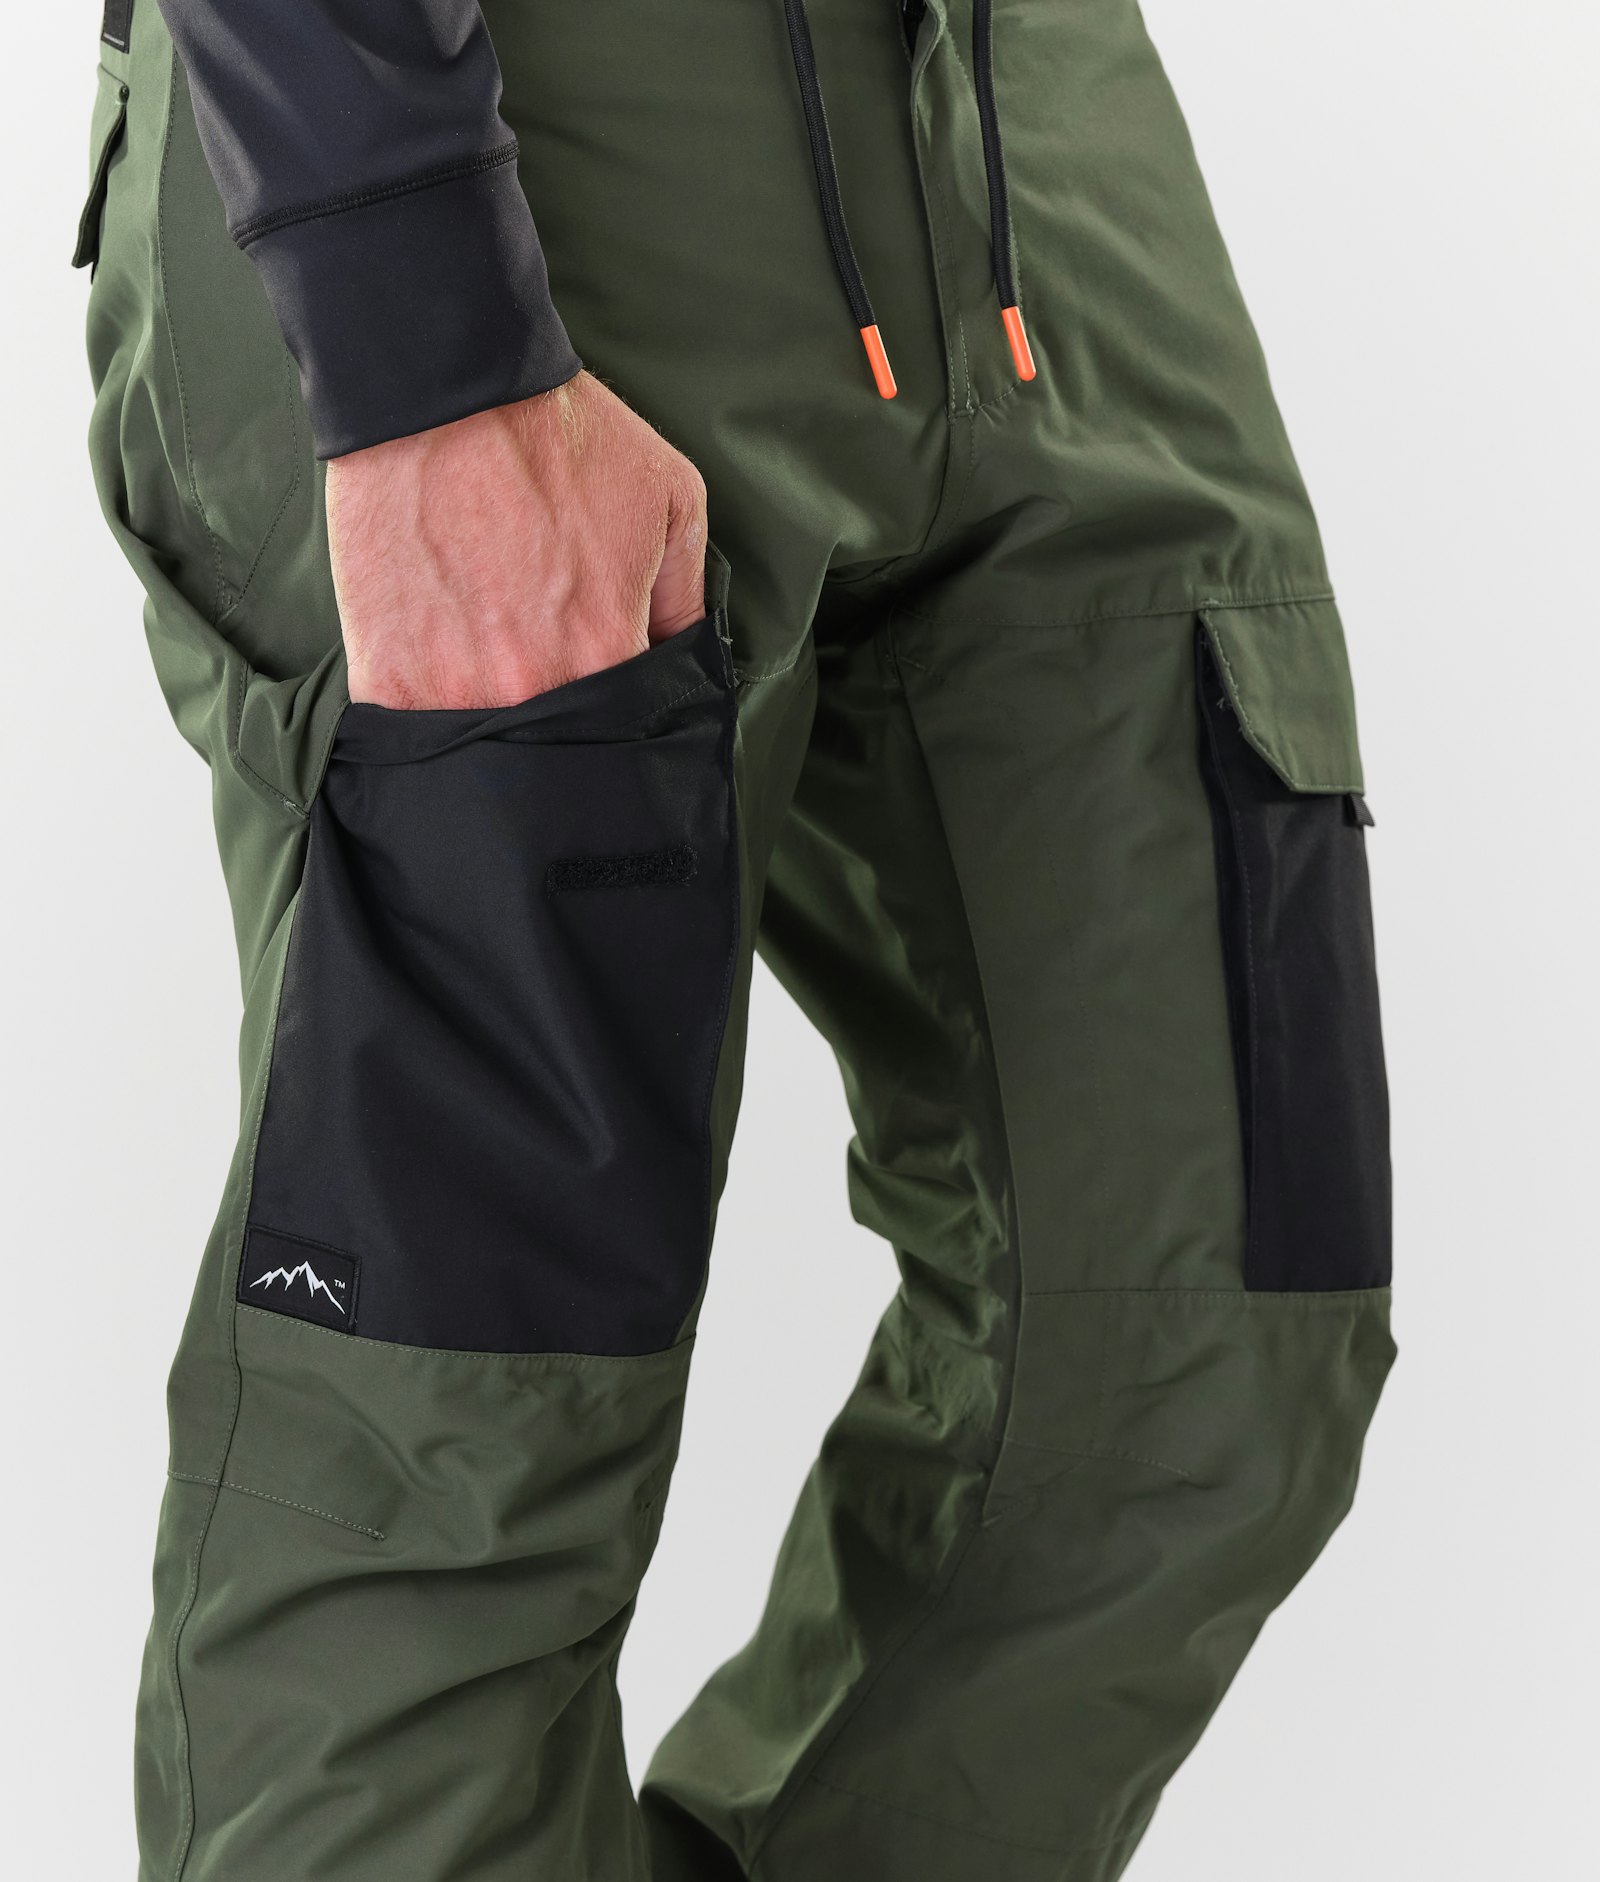 Poise Pantalon de Ski Homme Olive Green/Black